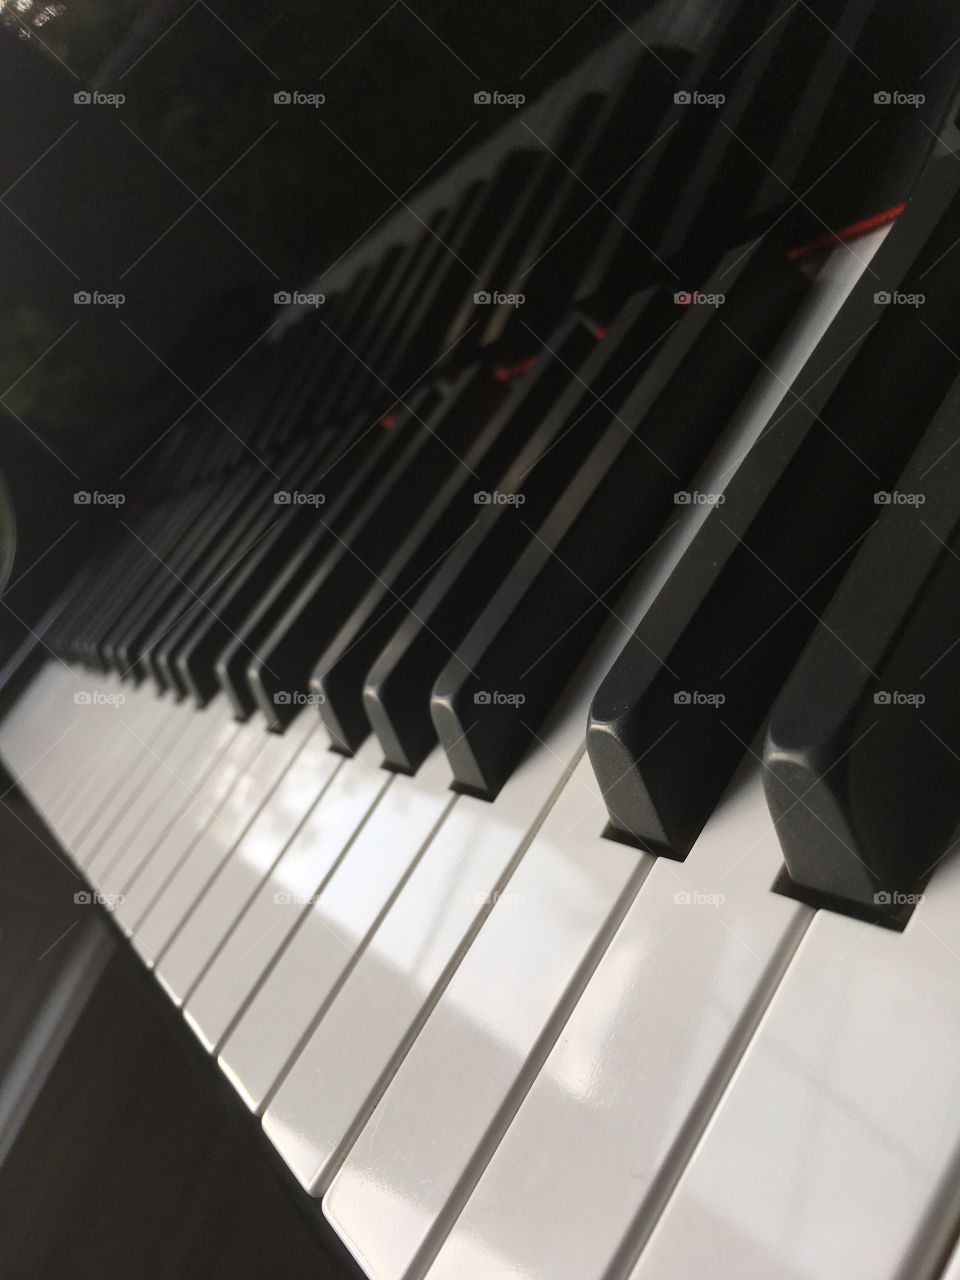 Piano keys in natural light 